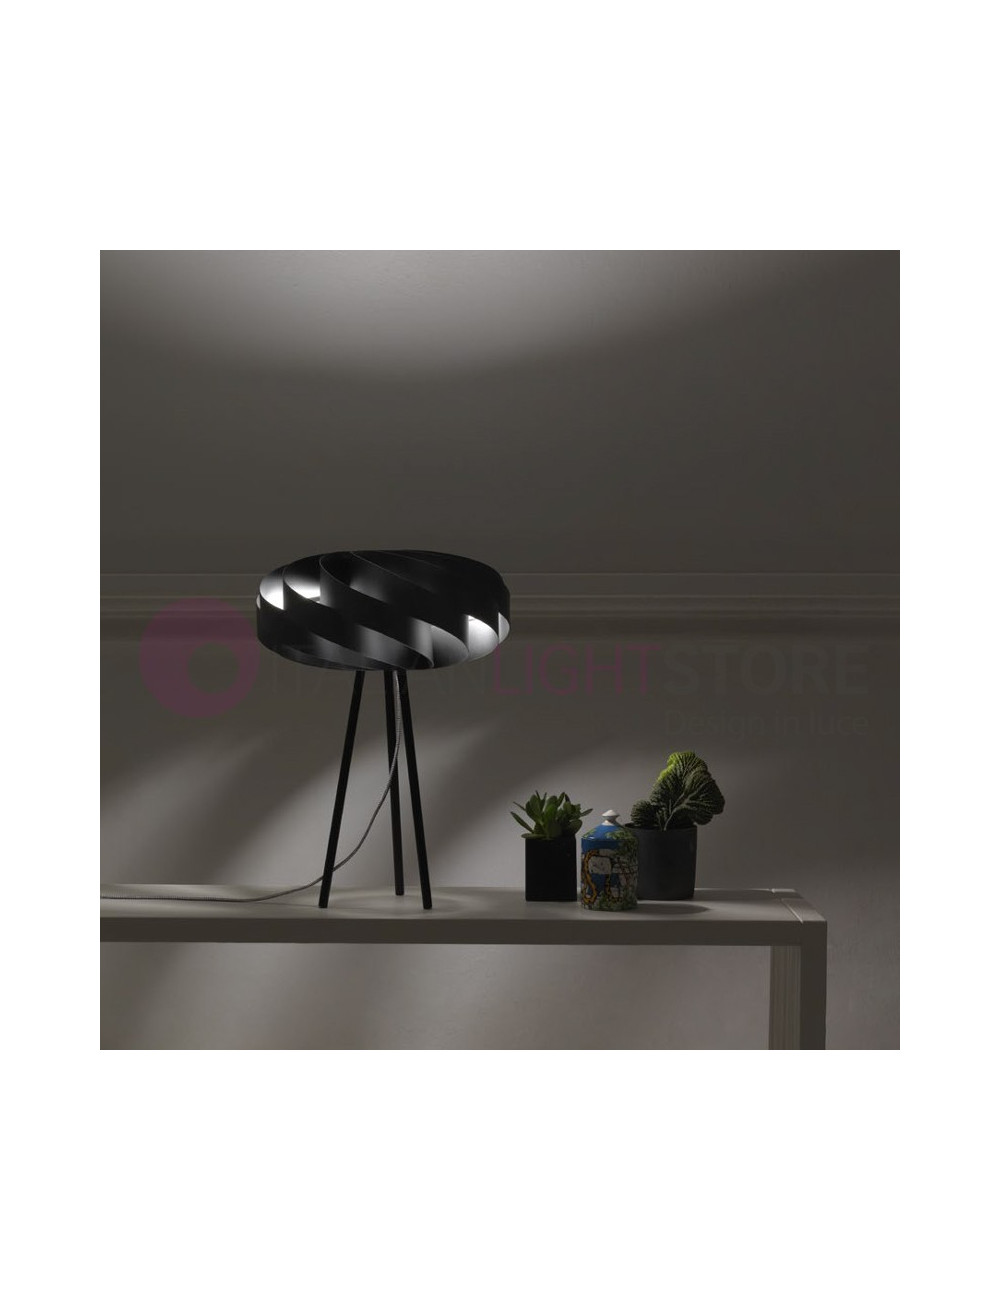 FLAT Floor Lamp Table Lamp Tripod Modern Design - Linea Zero